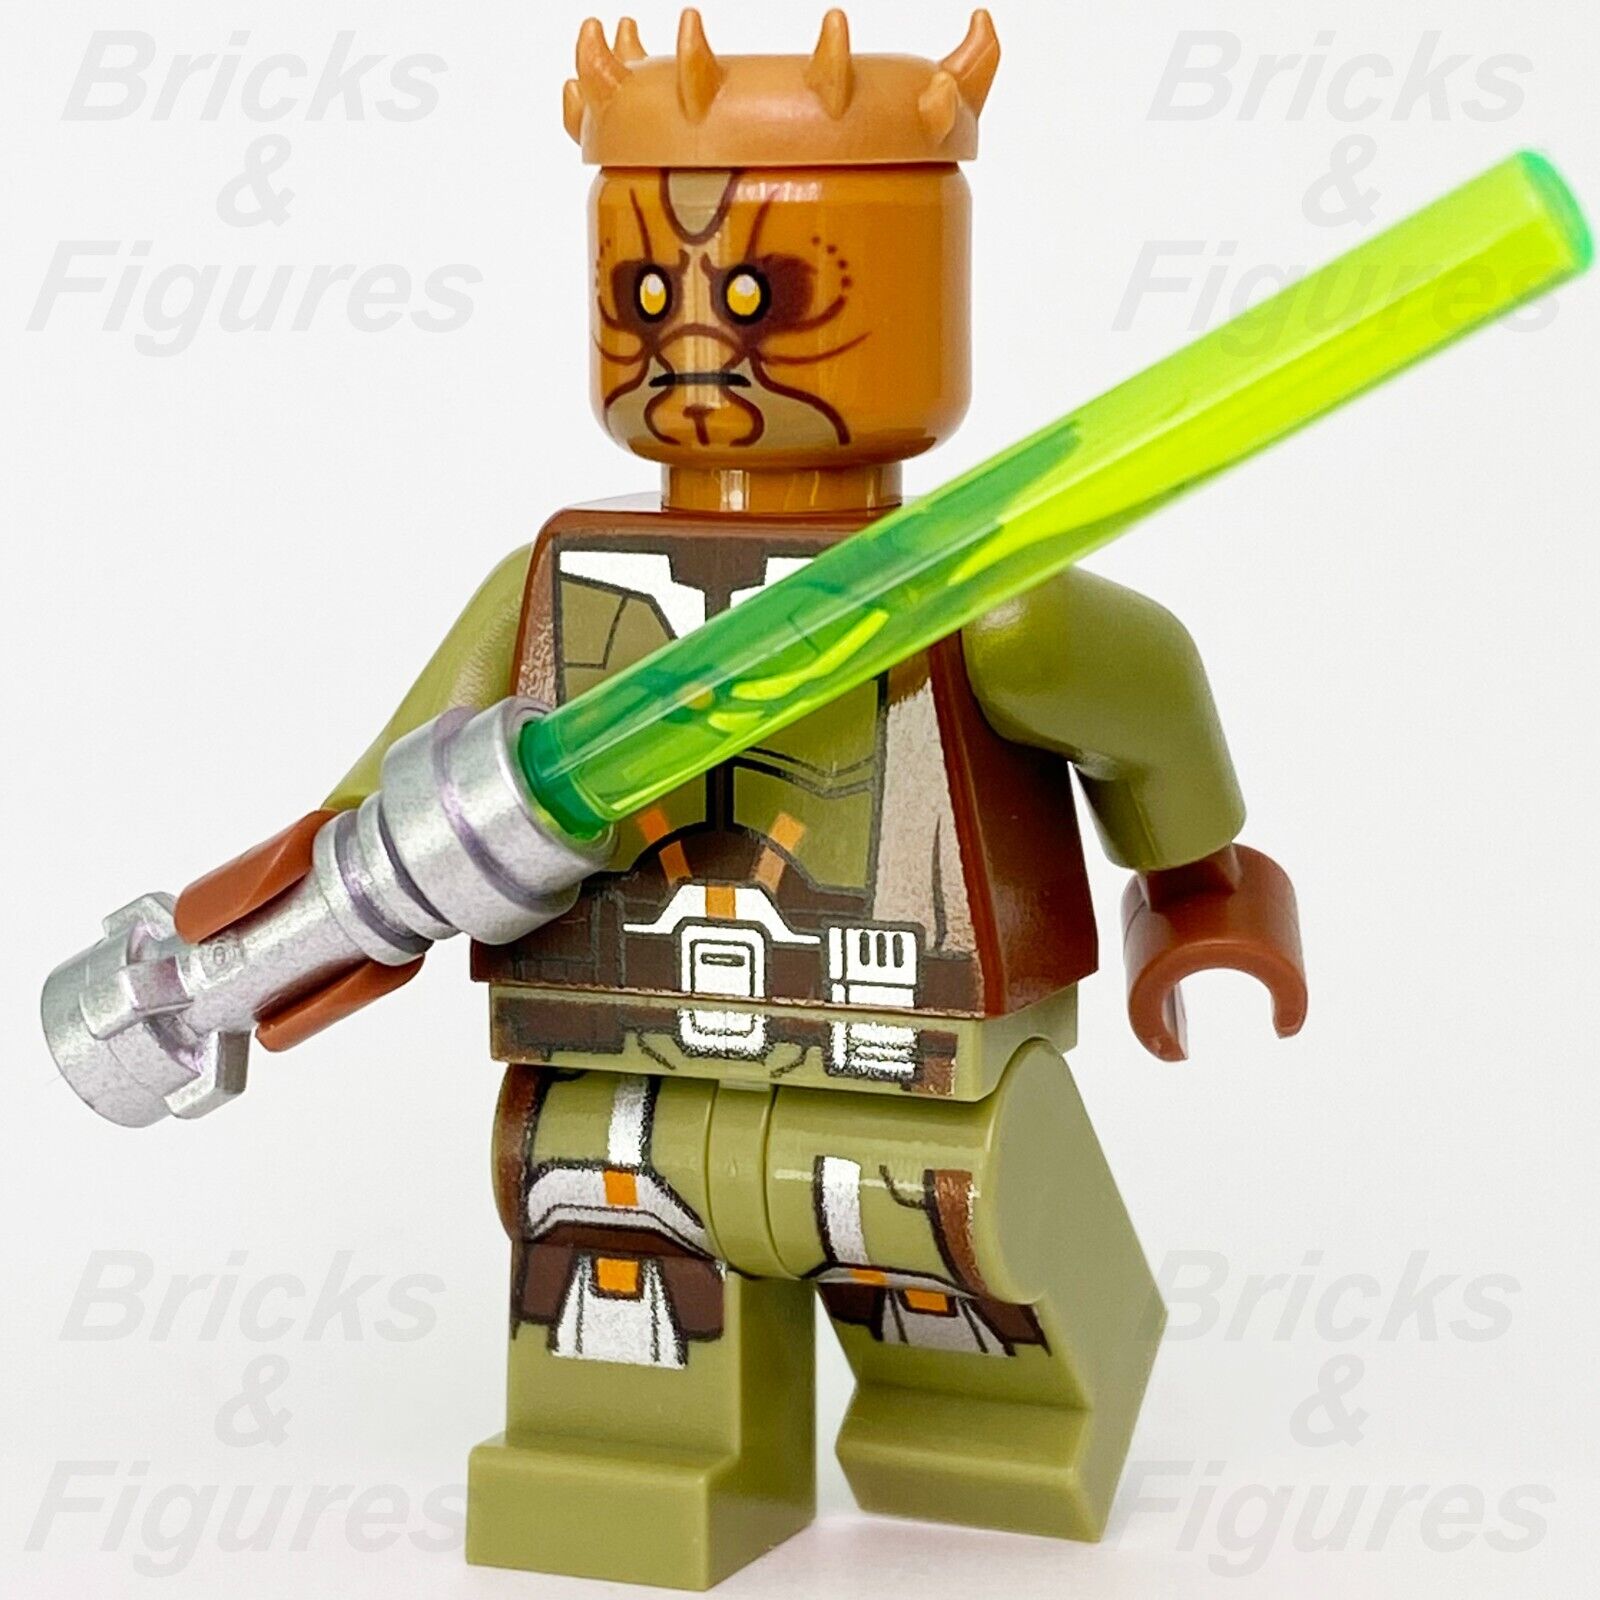 LEGO Star Wars Jedi Knight Minifigure Kao Cen Darach The Old Republic 75025